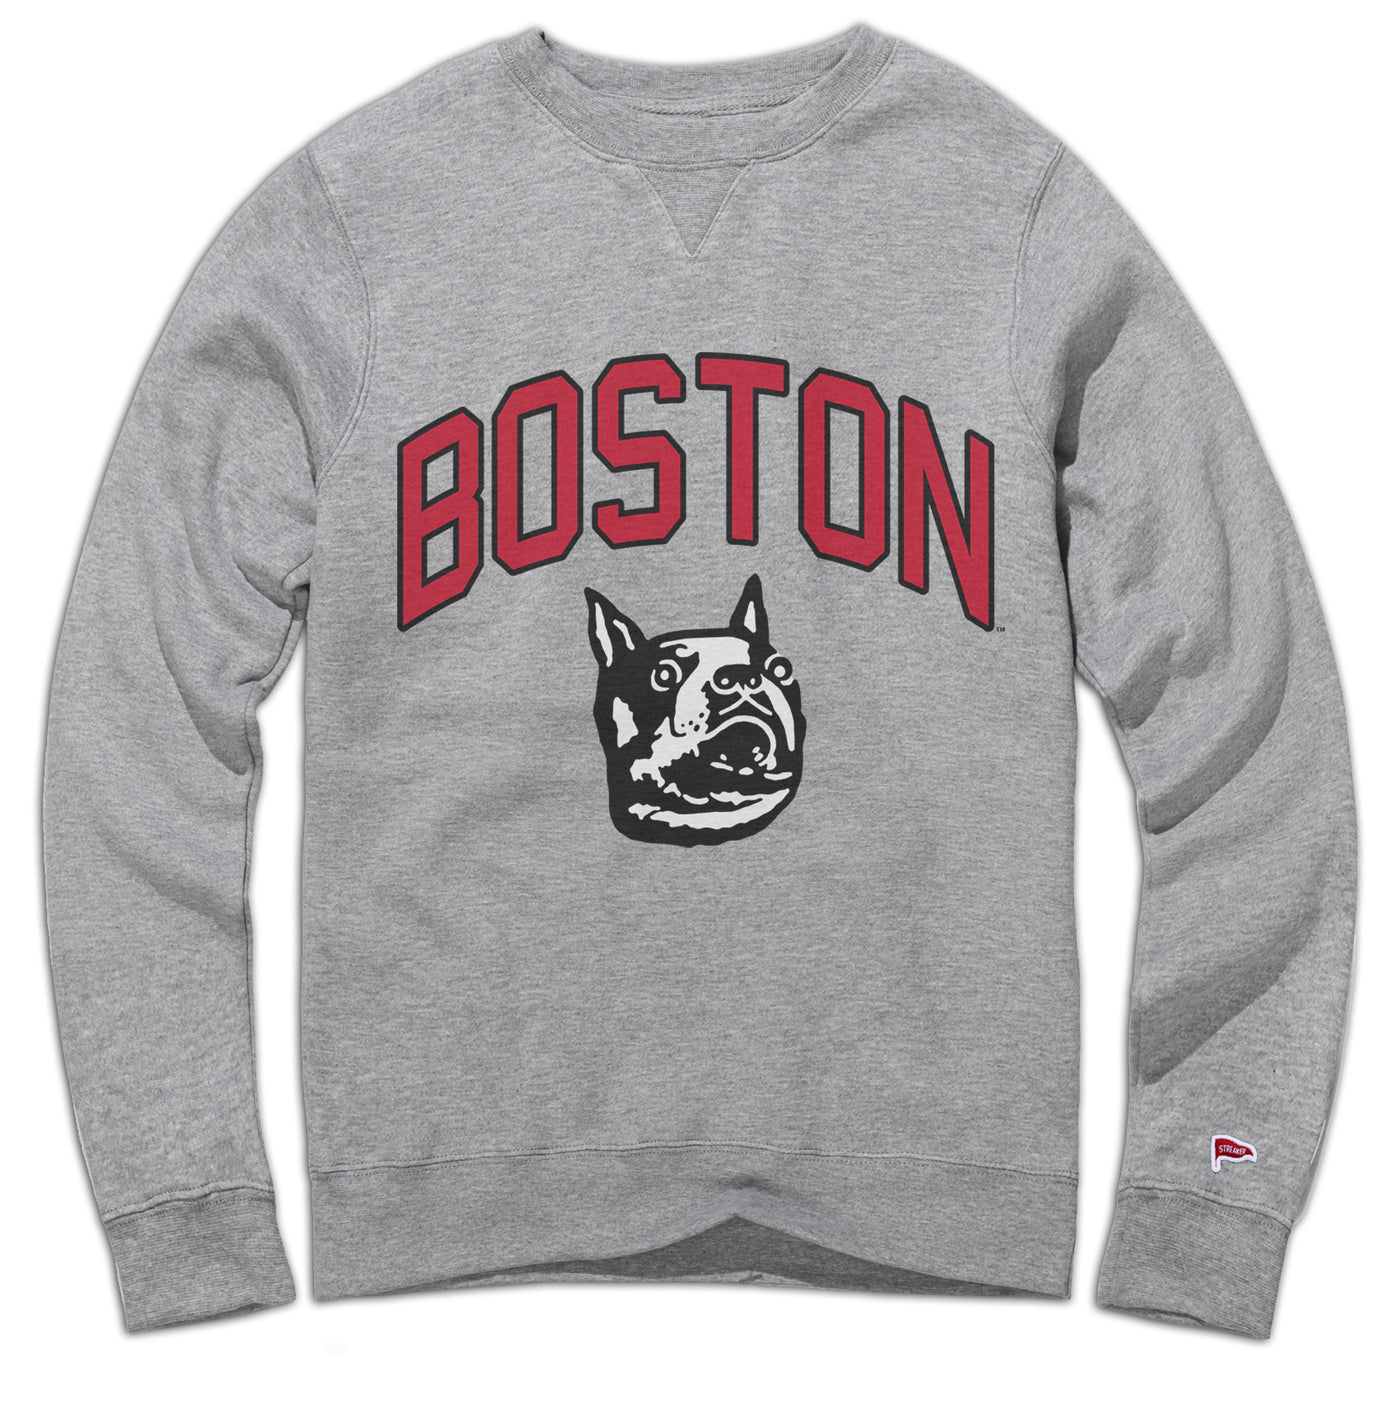 Boston University Vintage Hockey Sweatshirt